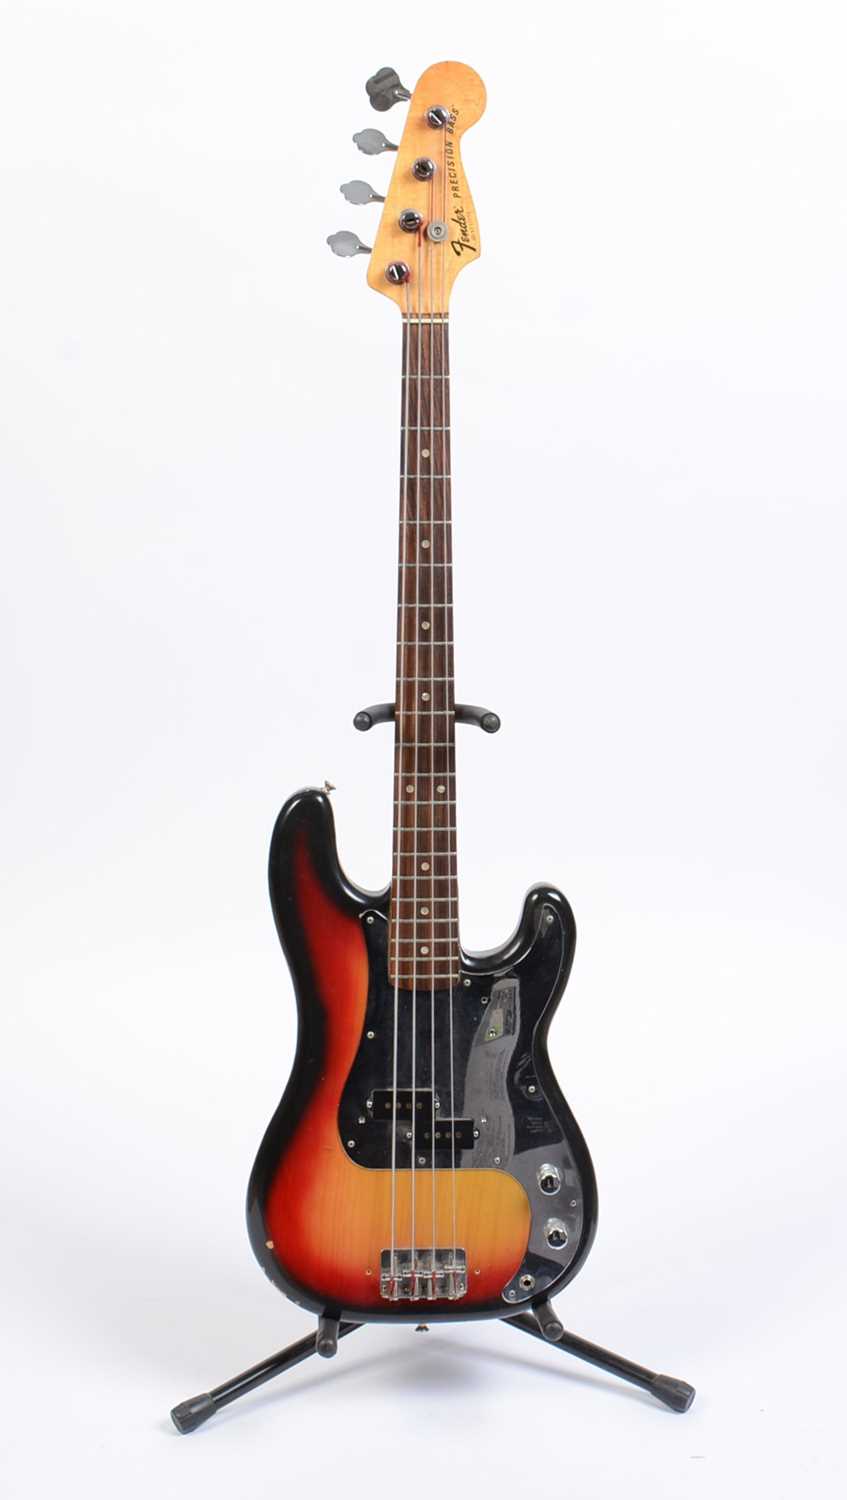 794 - 1977 Fender Precision bass guitar, Kym Bradshaw 'The Saints' 